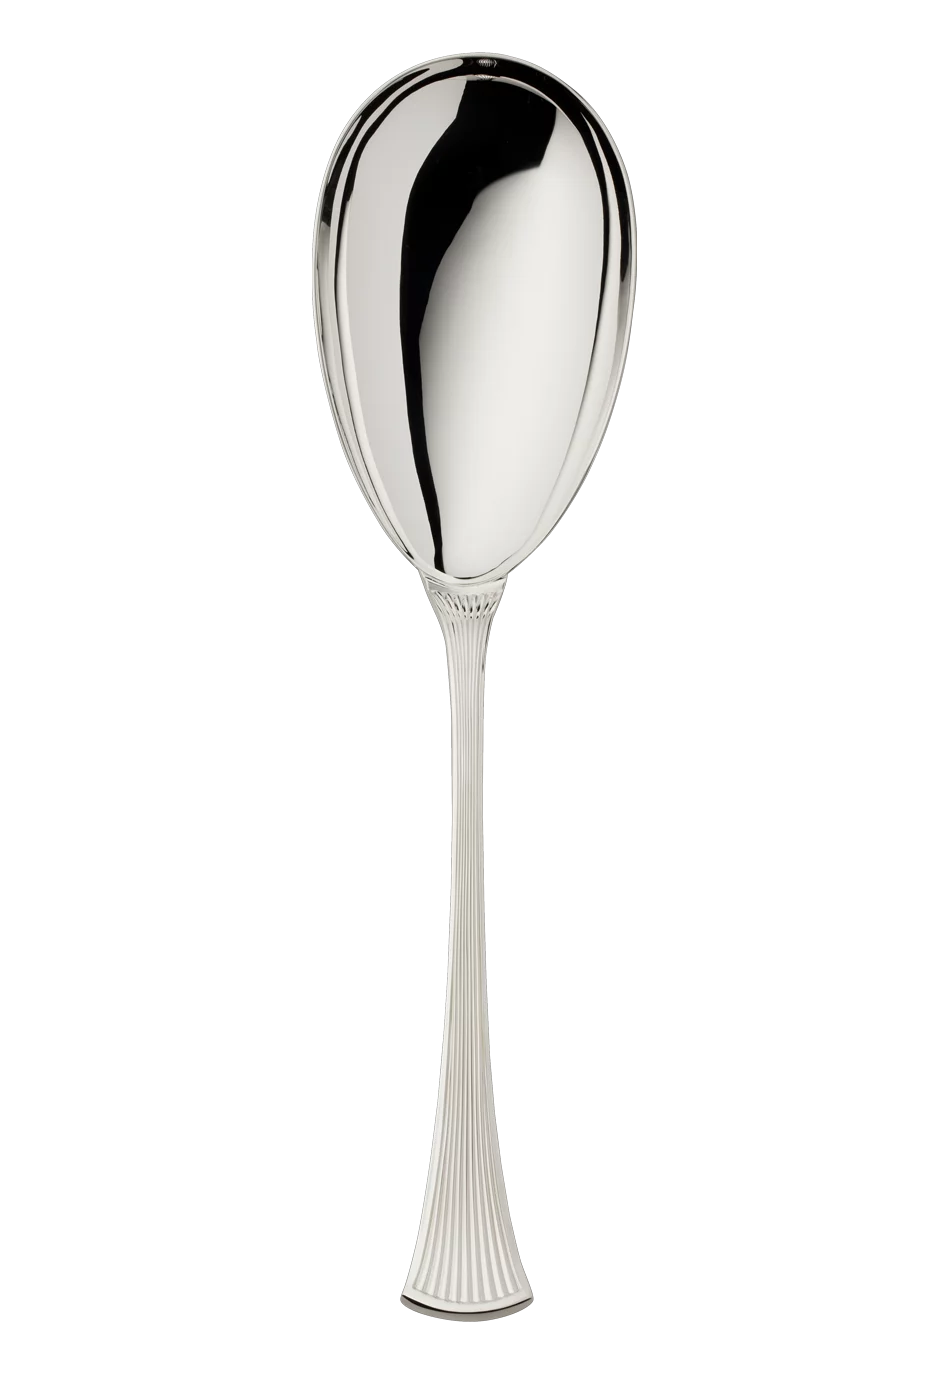 Avenue Serving Spoon (150g massive silverplated)